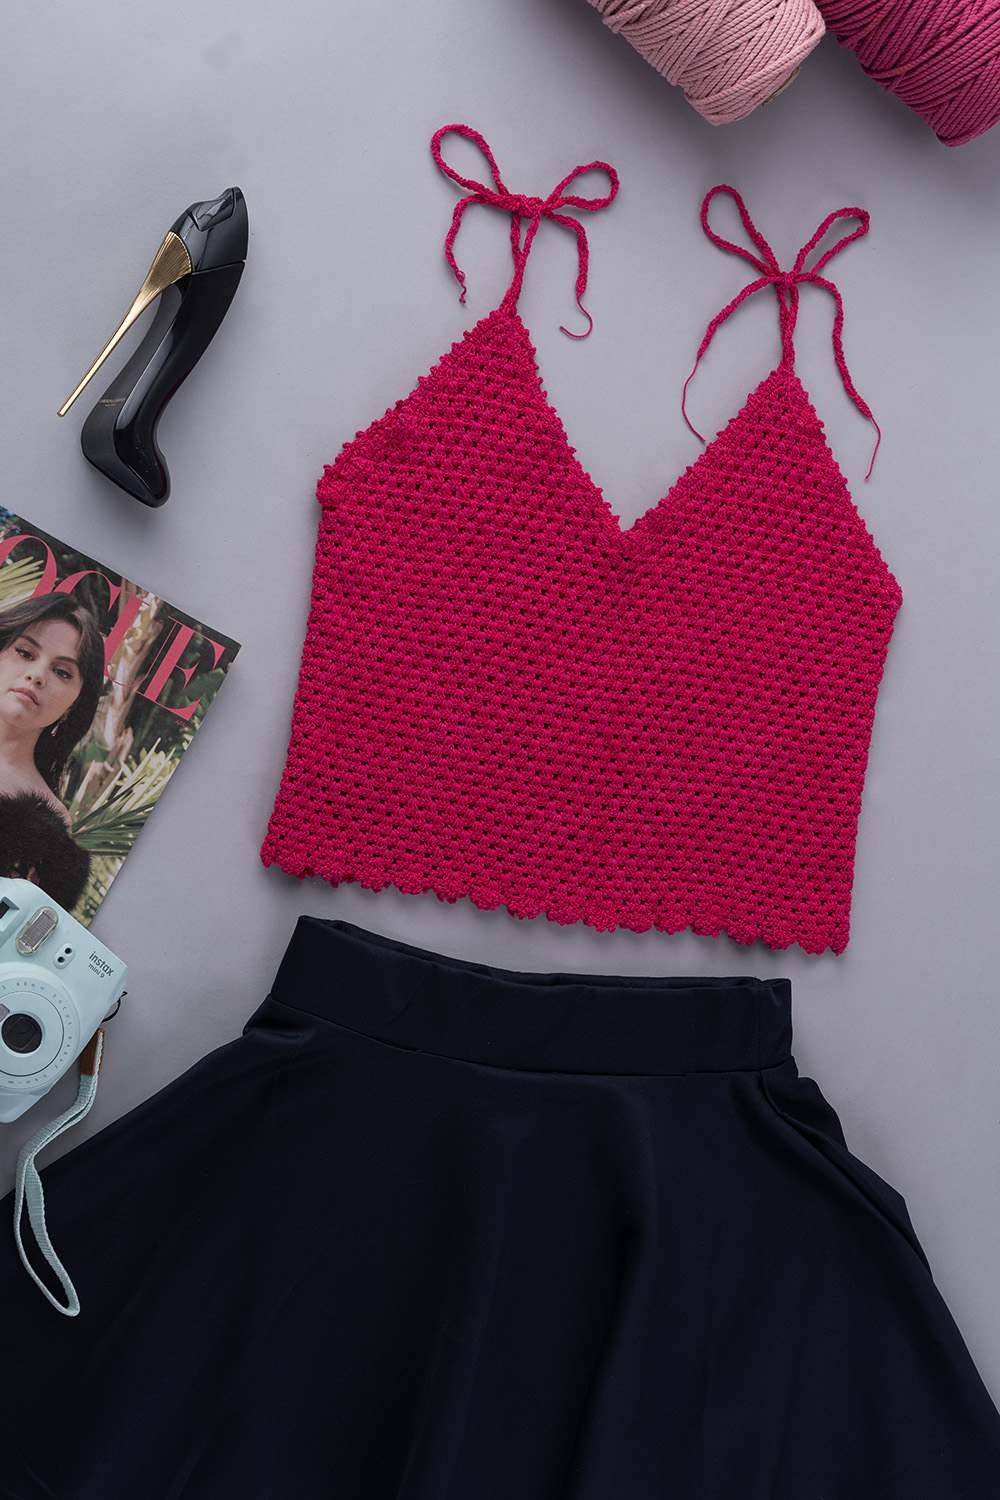 Buy Crochet V Neck Dark Pink Top In the Best Price - Hand Knitted Crochet Top & Bralette